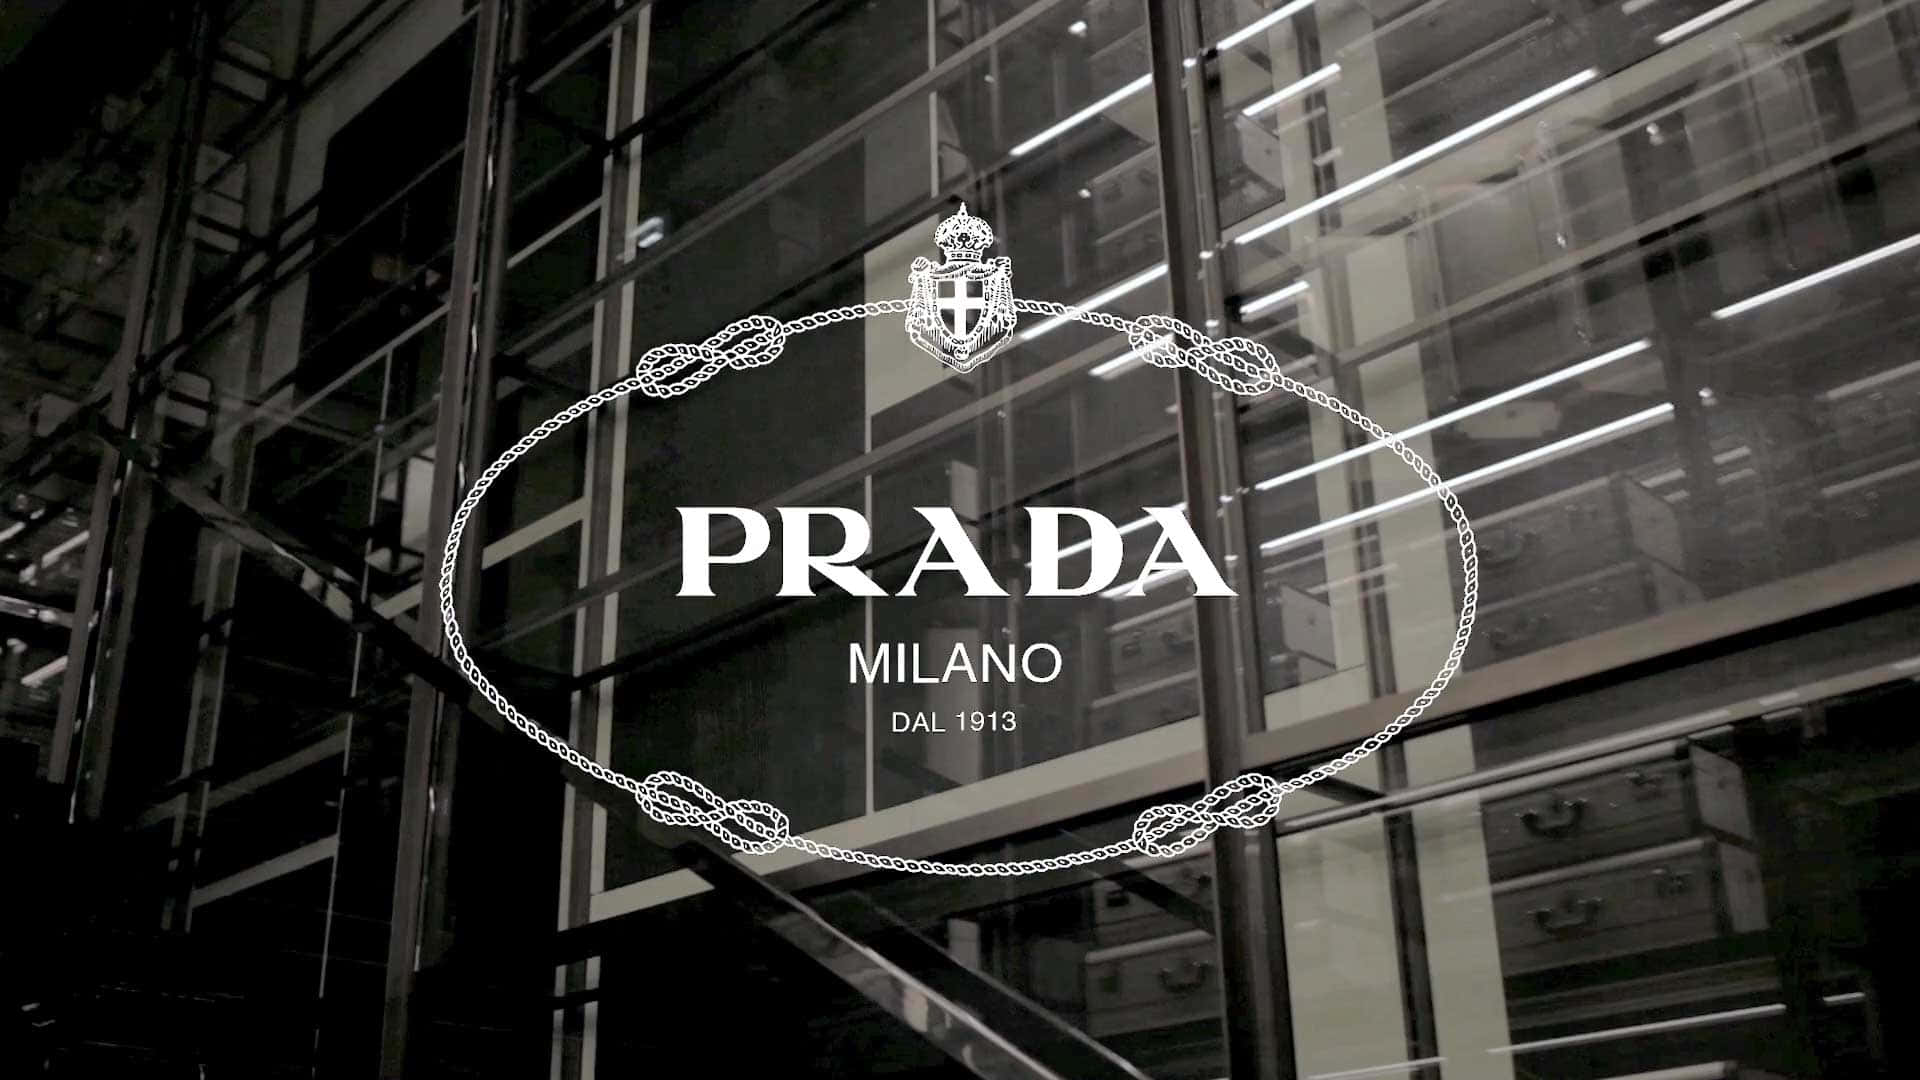 Make a Statement with Prada